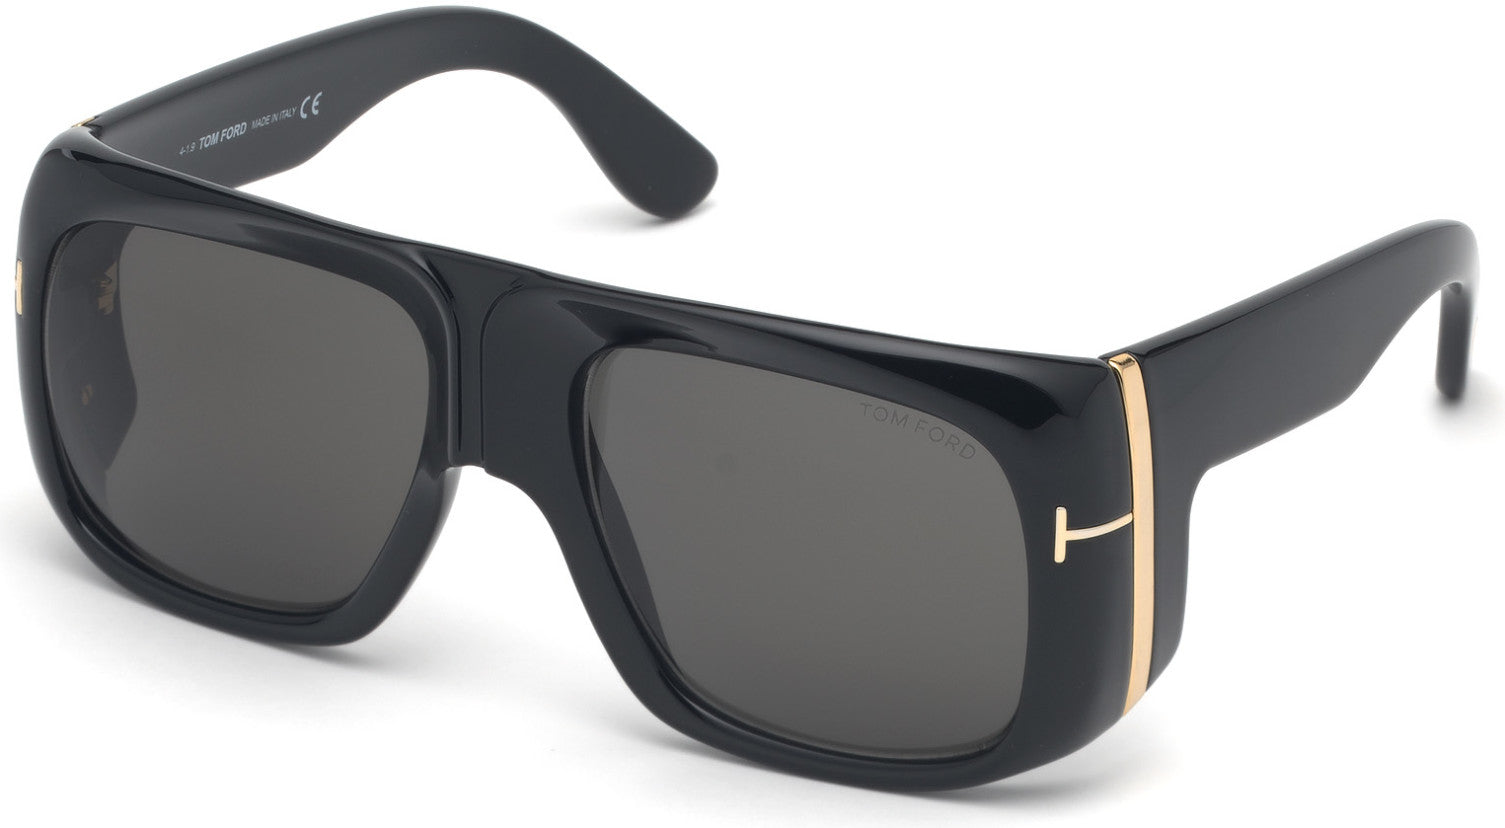 Tom Ford FT0733 Gino Square Sunglasses 01A-01A - Shiny Black/ Smoke Lenses - Fw19 Adv Style